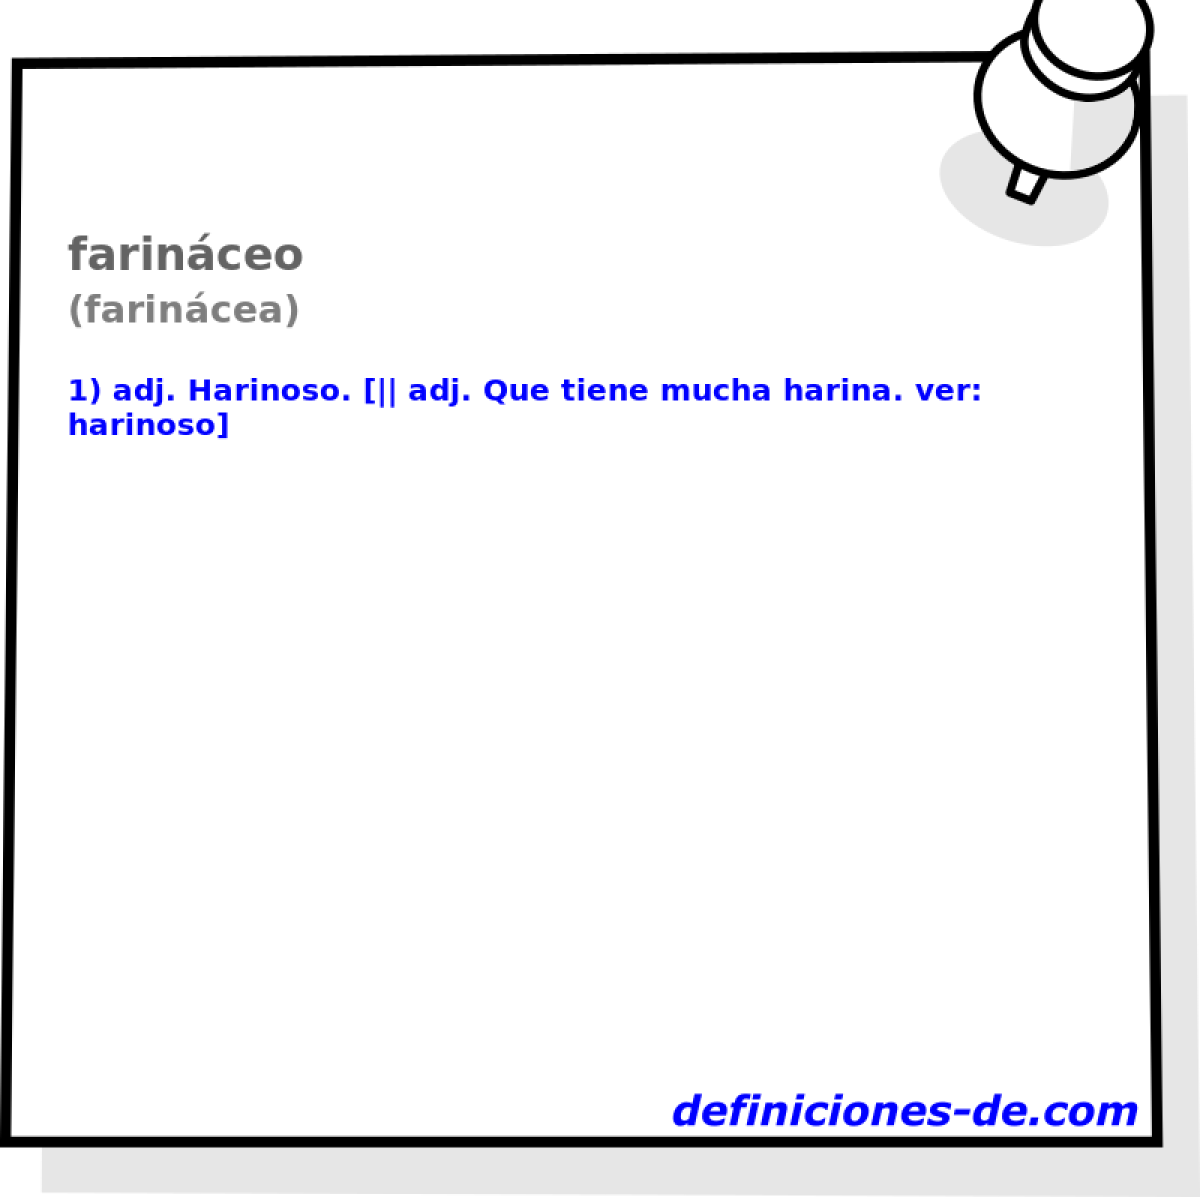 farinceo (farincea)